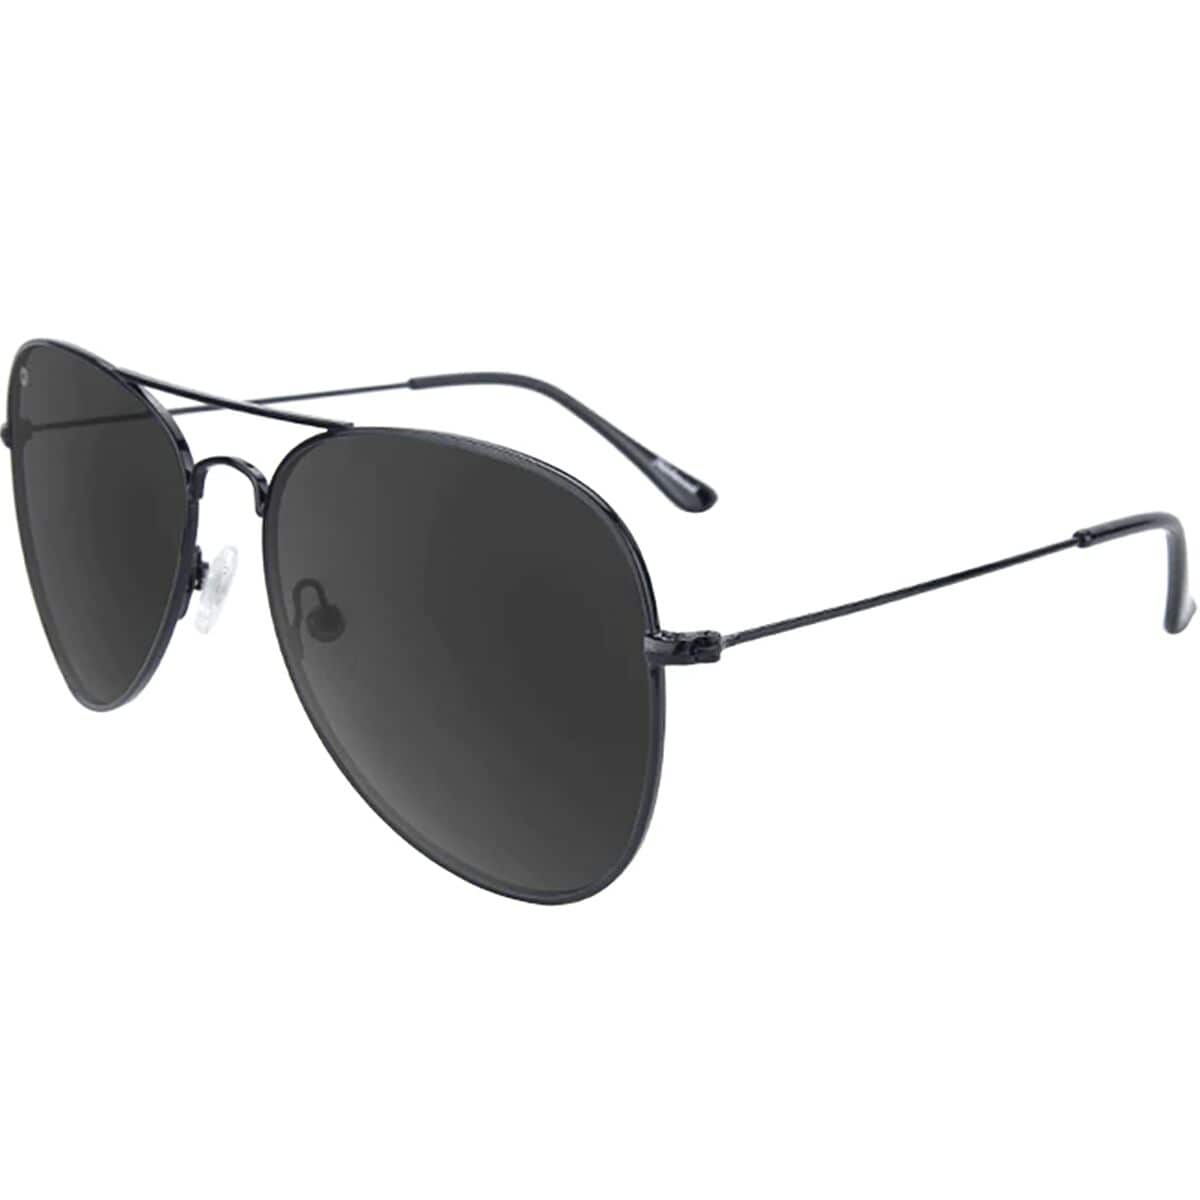 Knockaround Mile Highs Polarized Sunglasses - Accessories